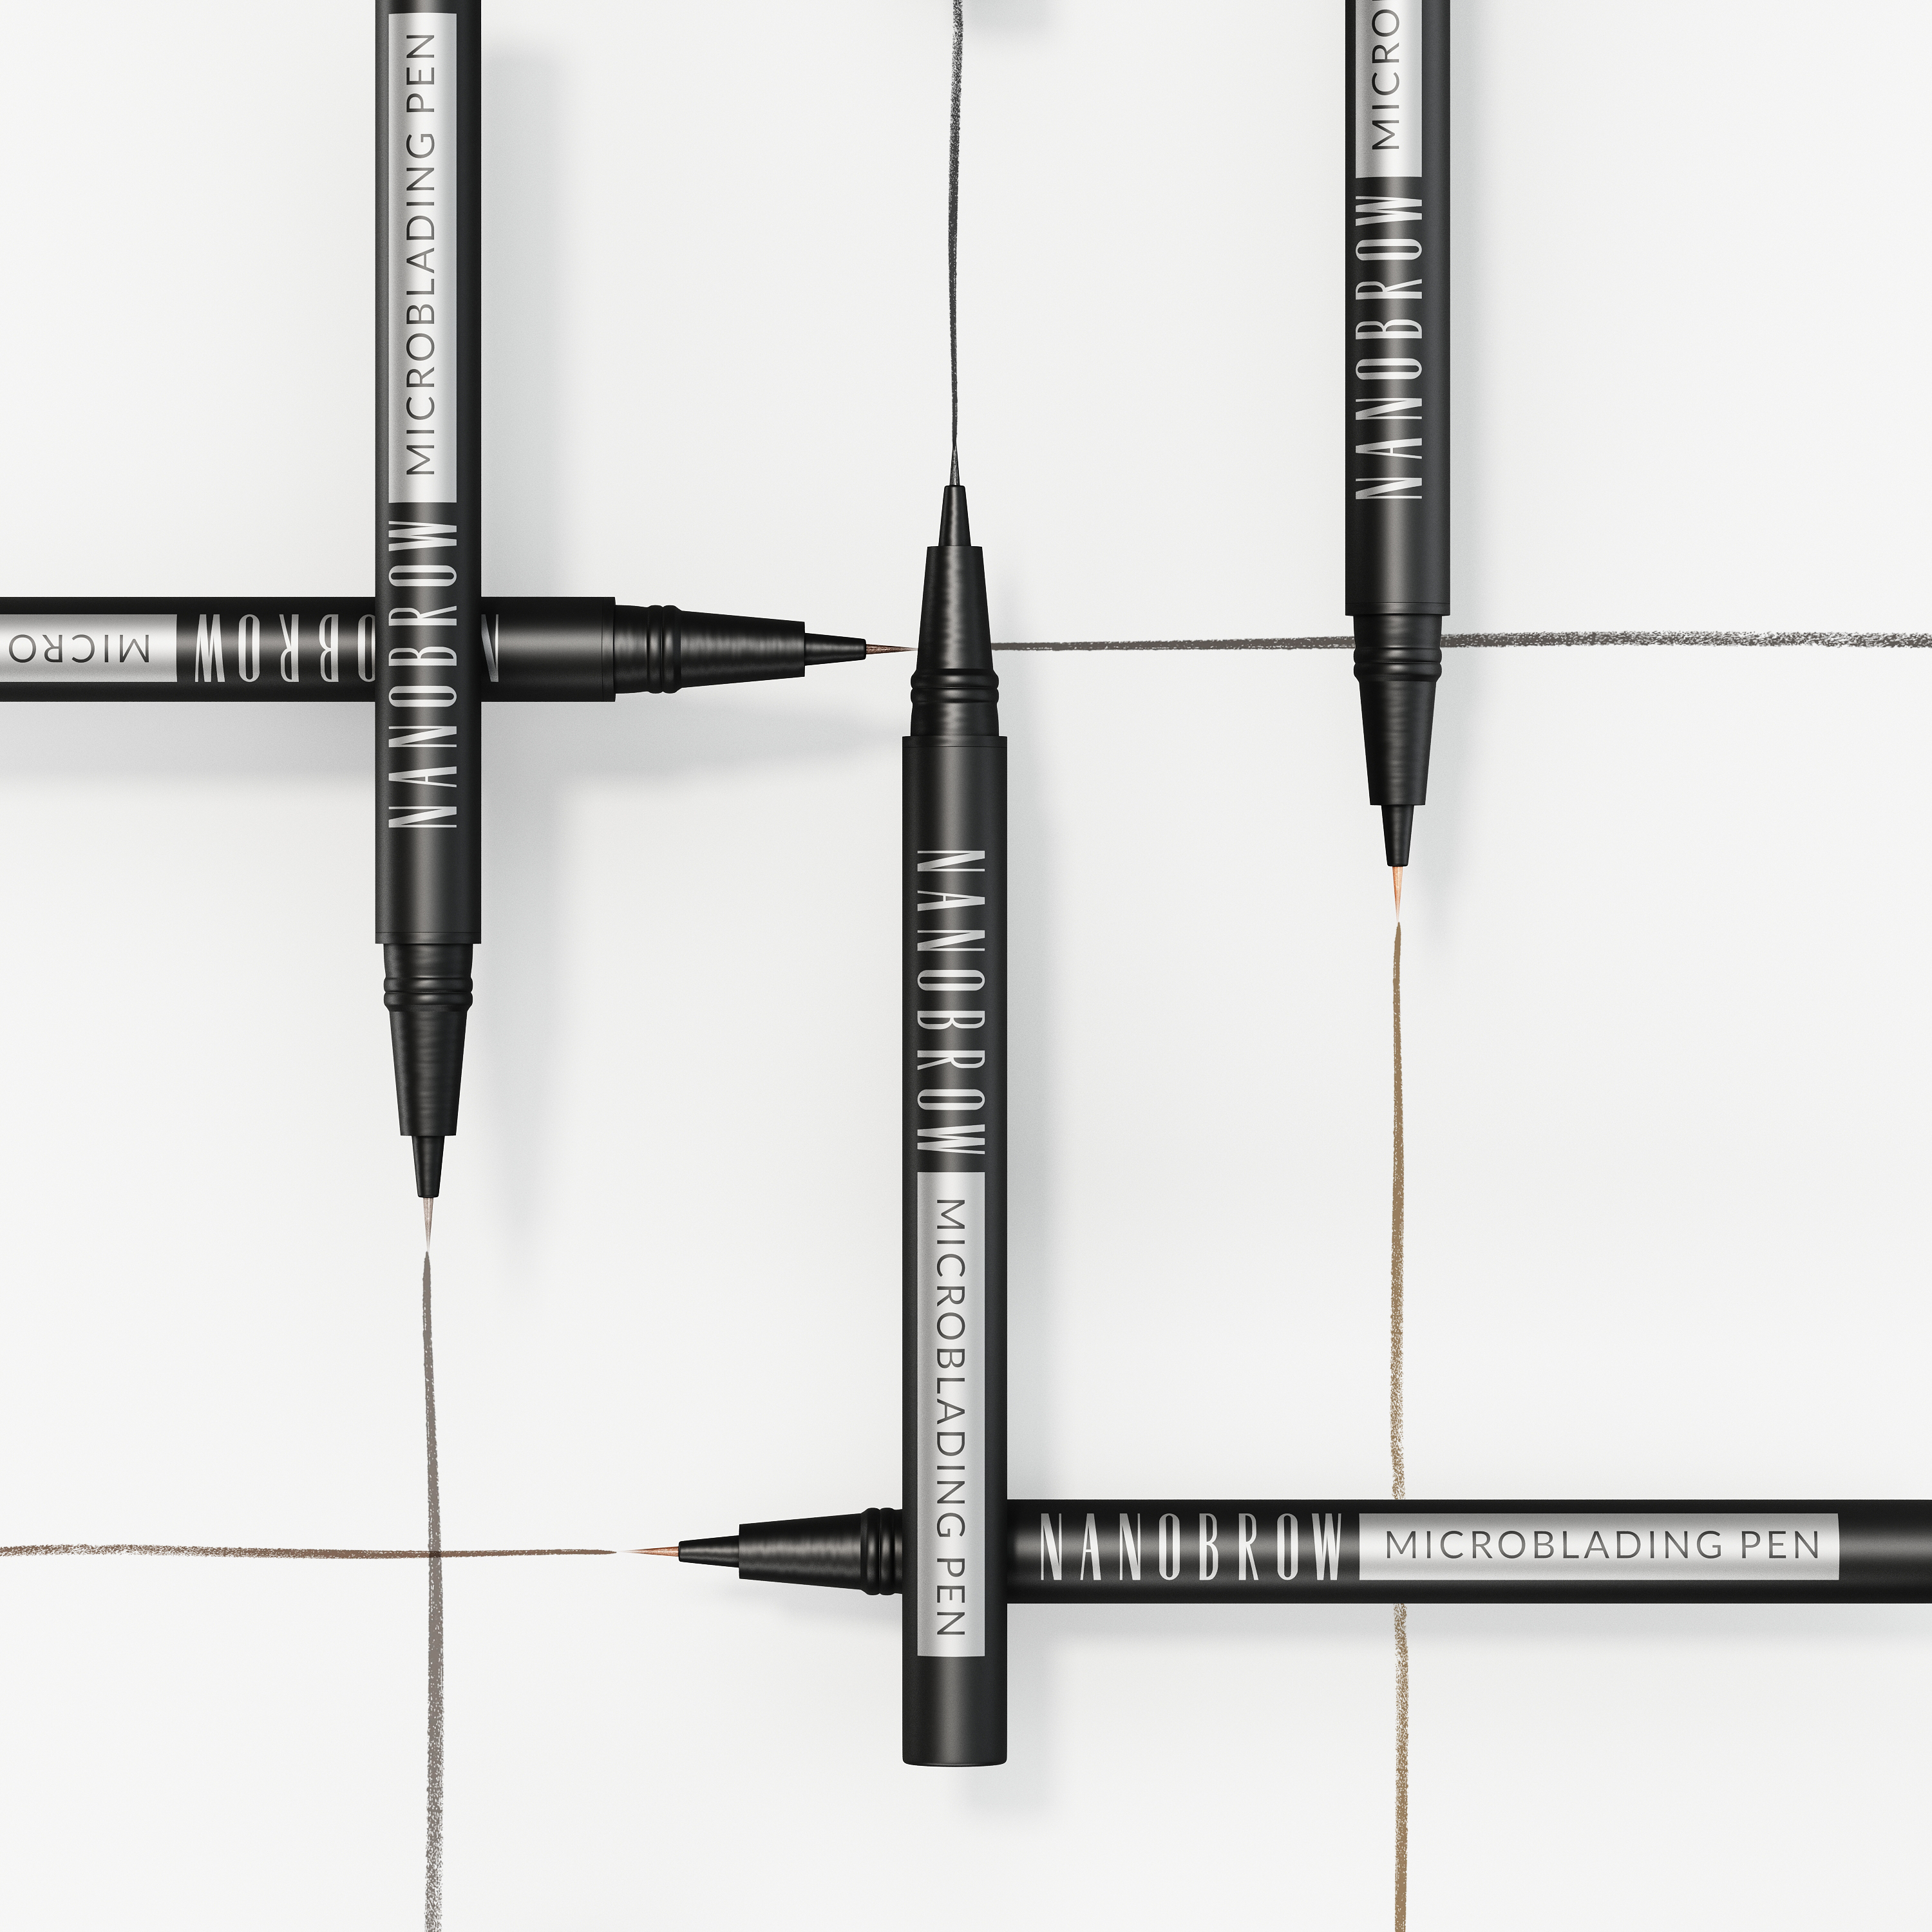 Innovativa, precisa, esclusiva: Nanobrow Microblading Pen